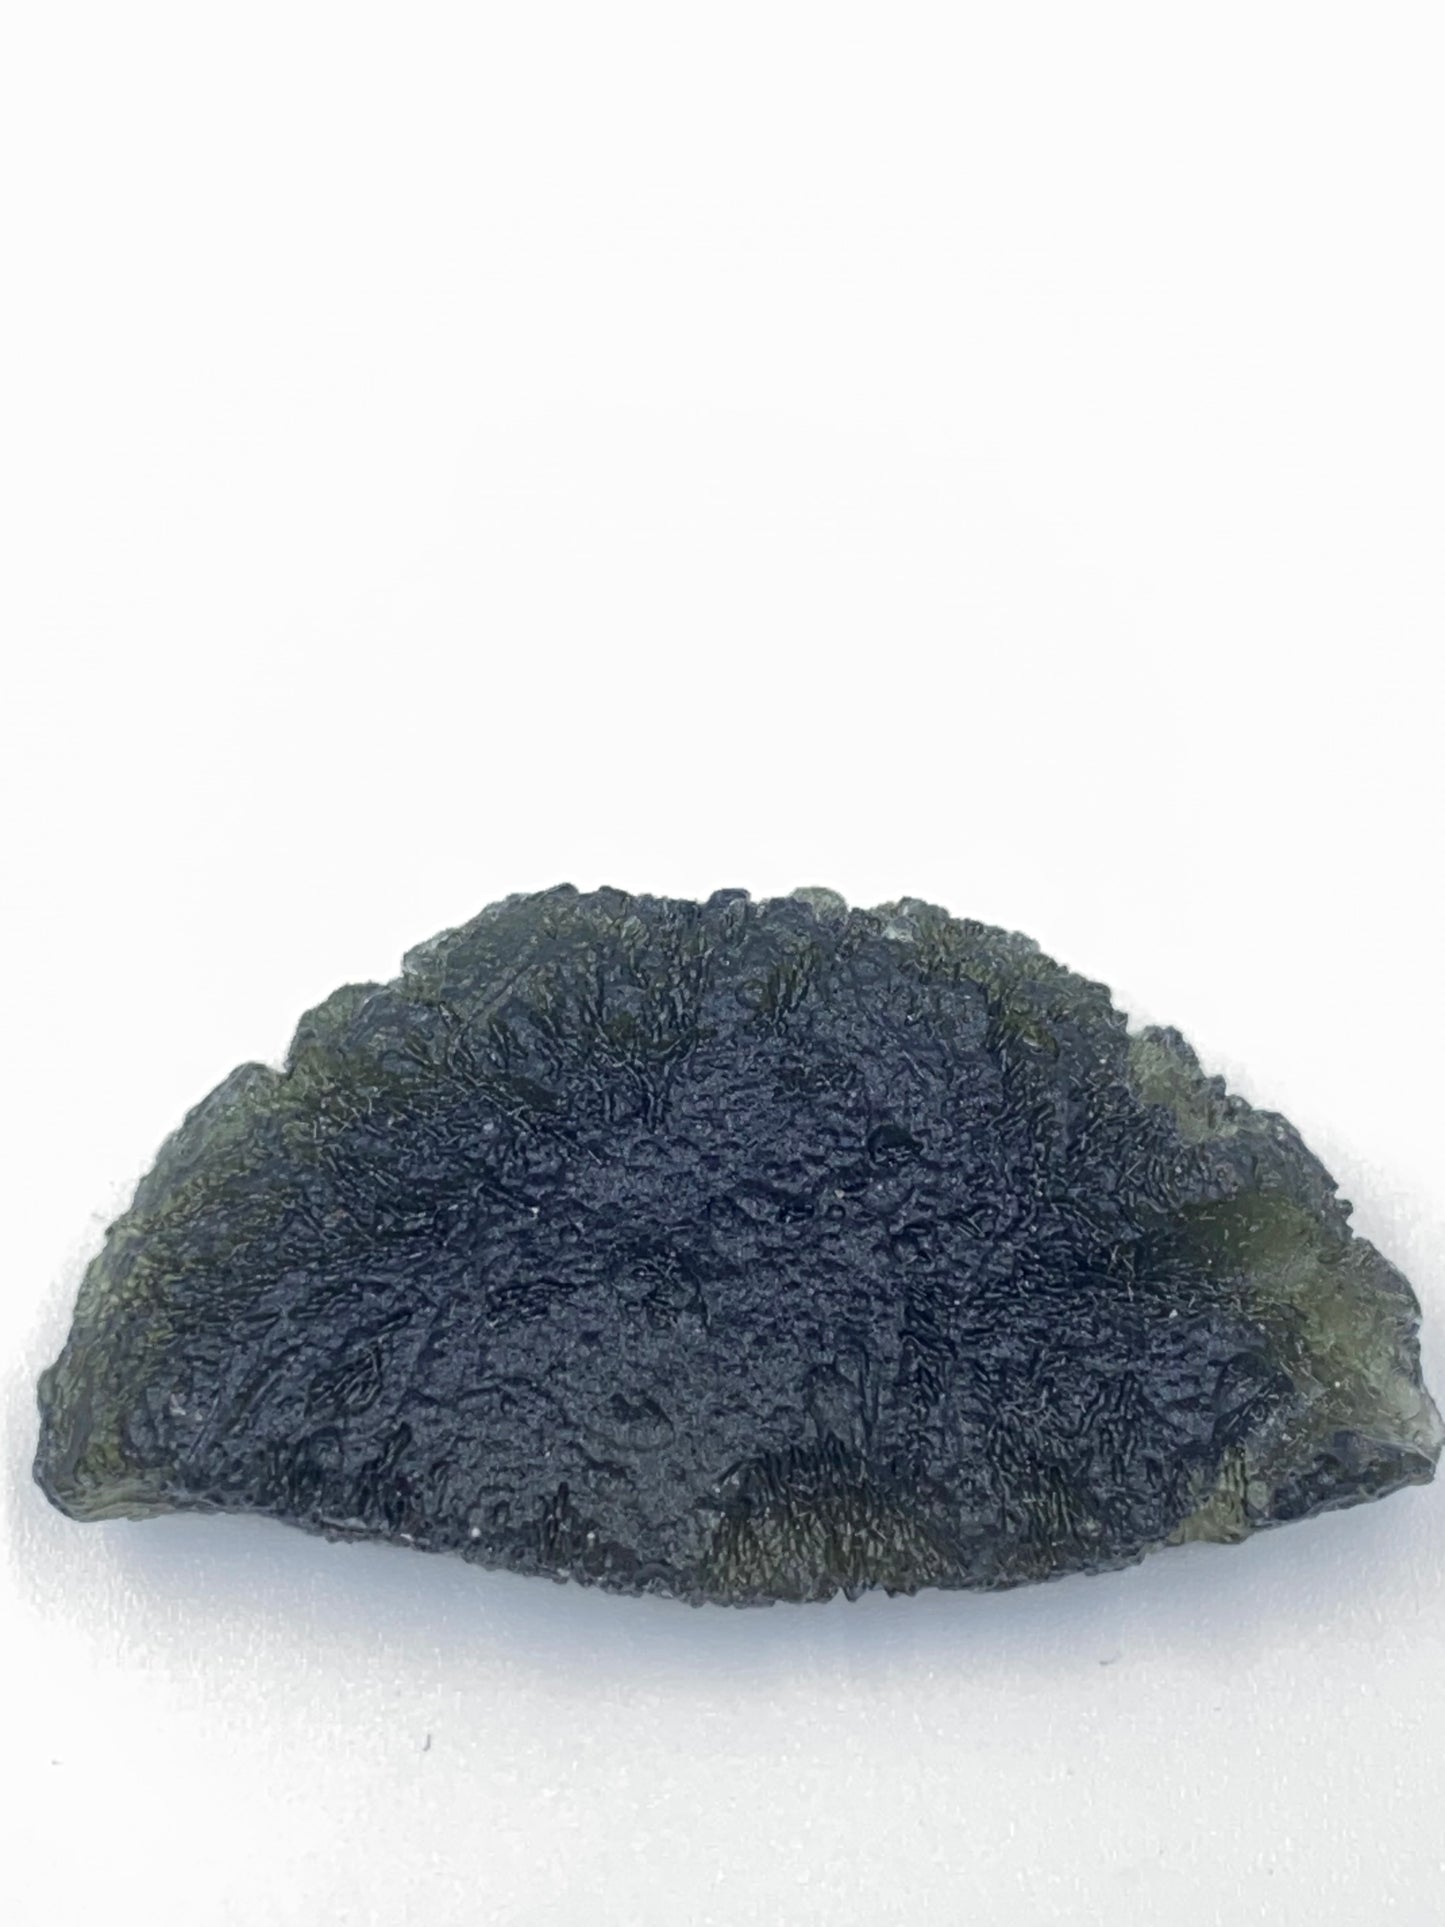 Chlum Moldavite 9 gram